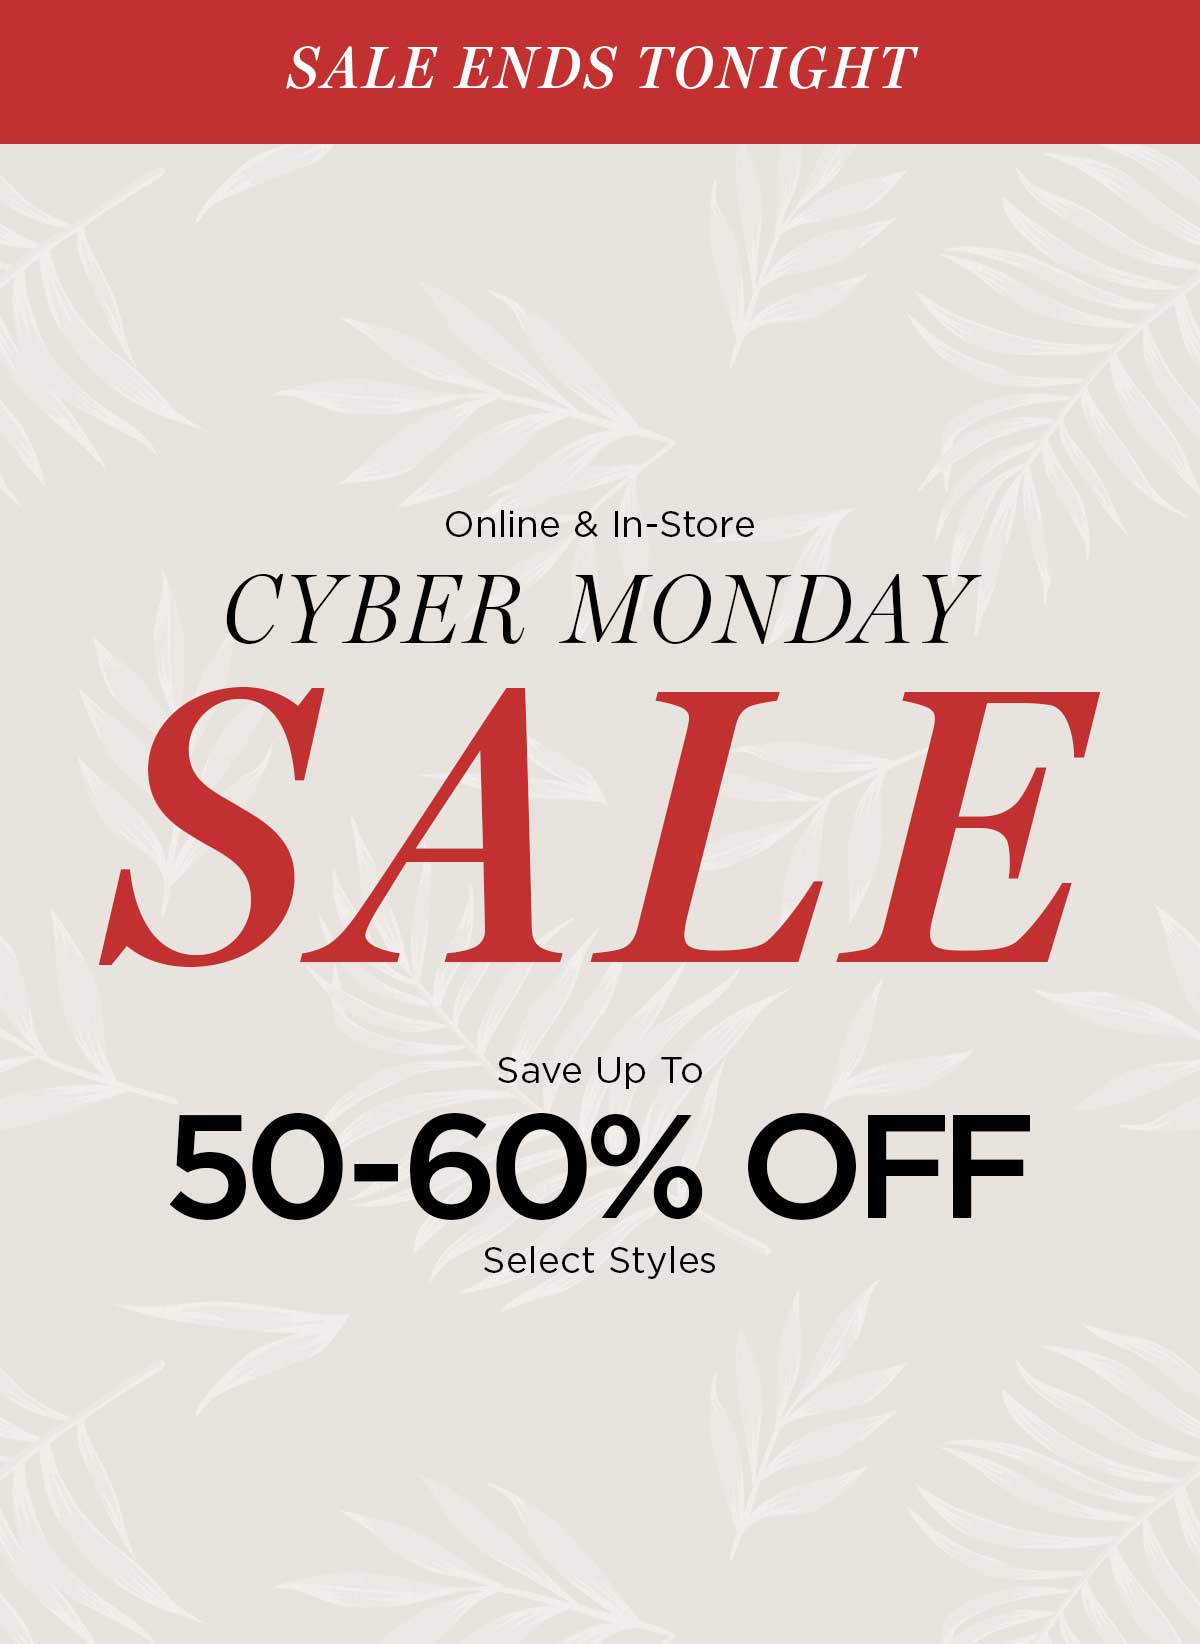 SALE ENDS TONIGHT: Cyber Monday Sale